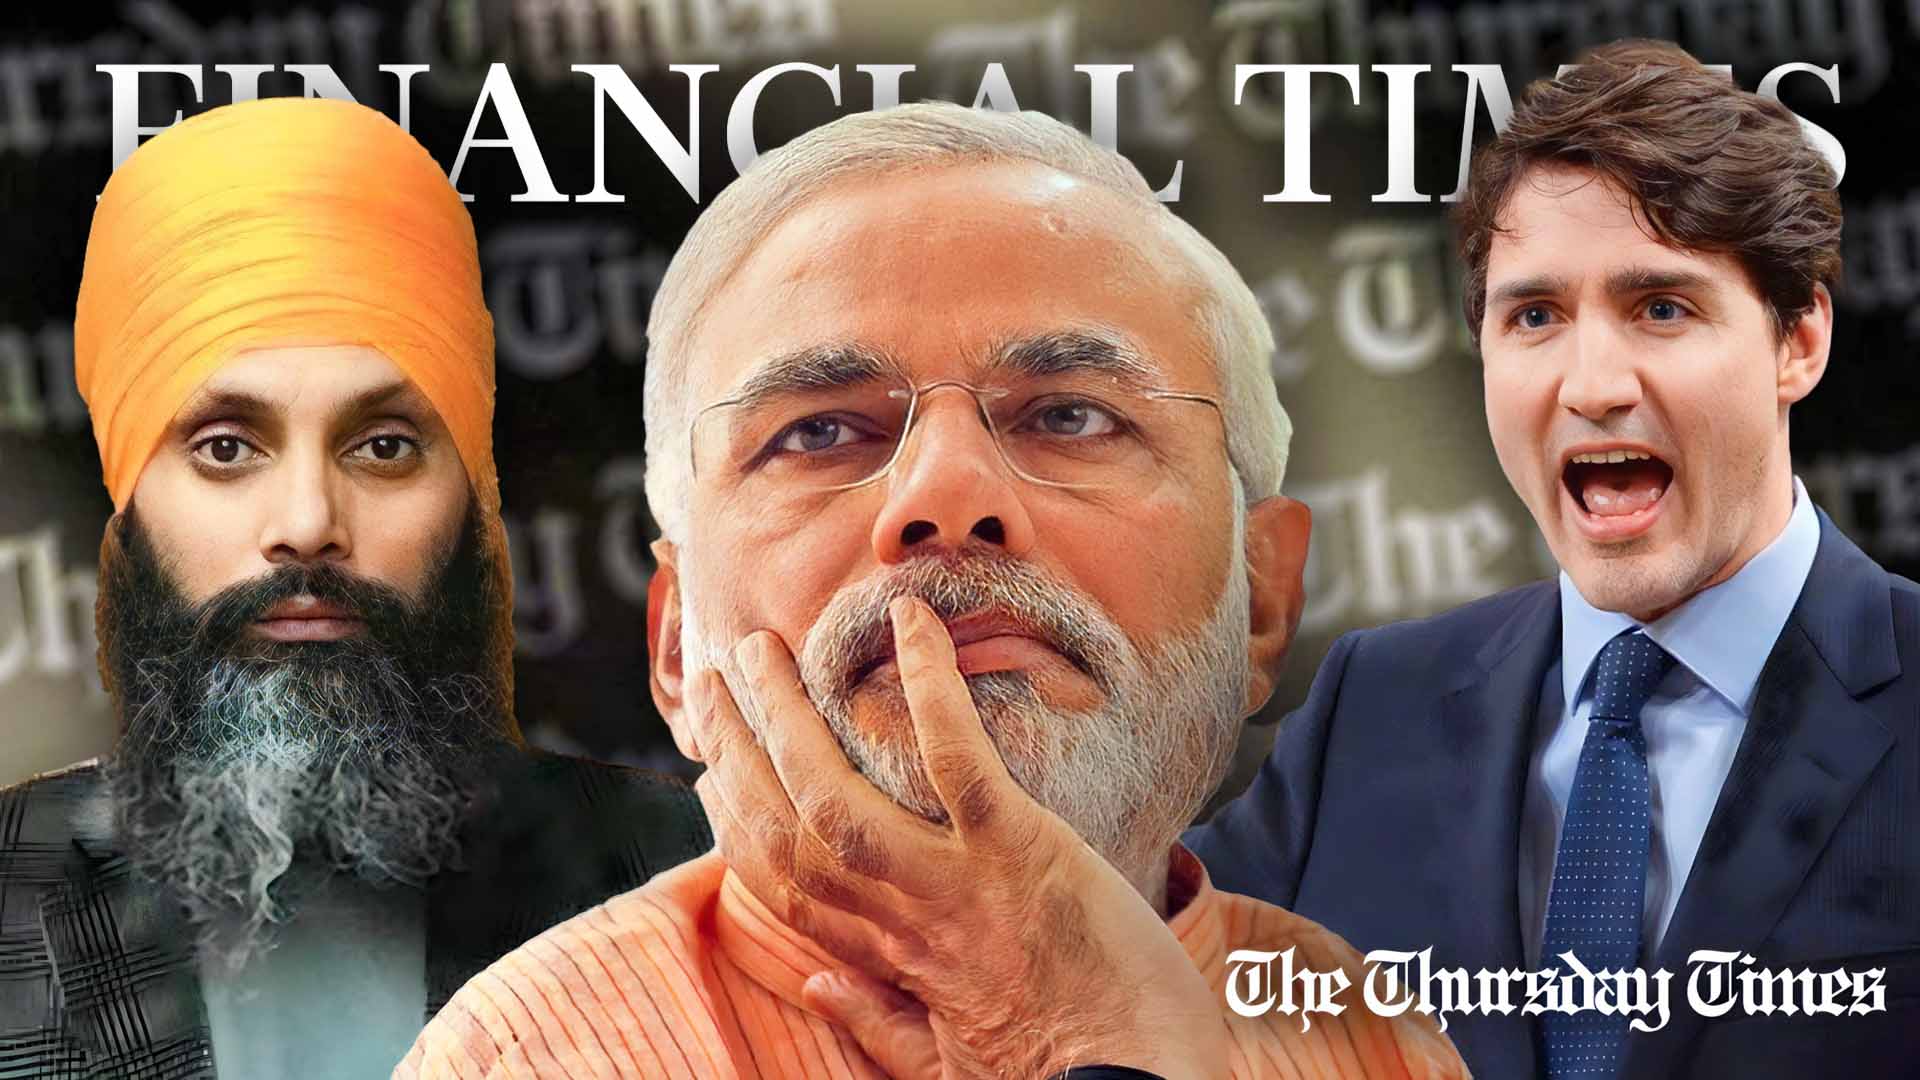 A file photo is shown of Khalistani activist Hardeep Singh Nijjar (L), Bharati prime minister Narendra Modi (C), and Canadian prime minister Justin Trudeau (R). — FILE/THE THURSDAY TIMES